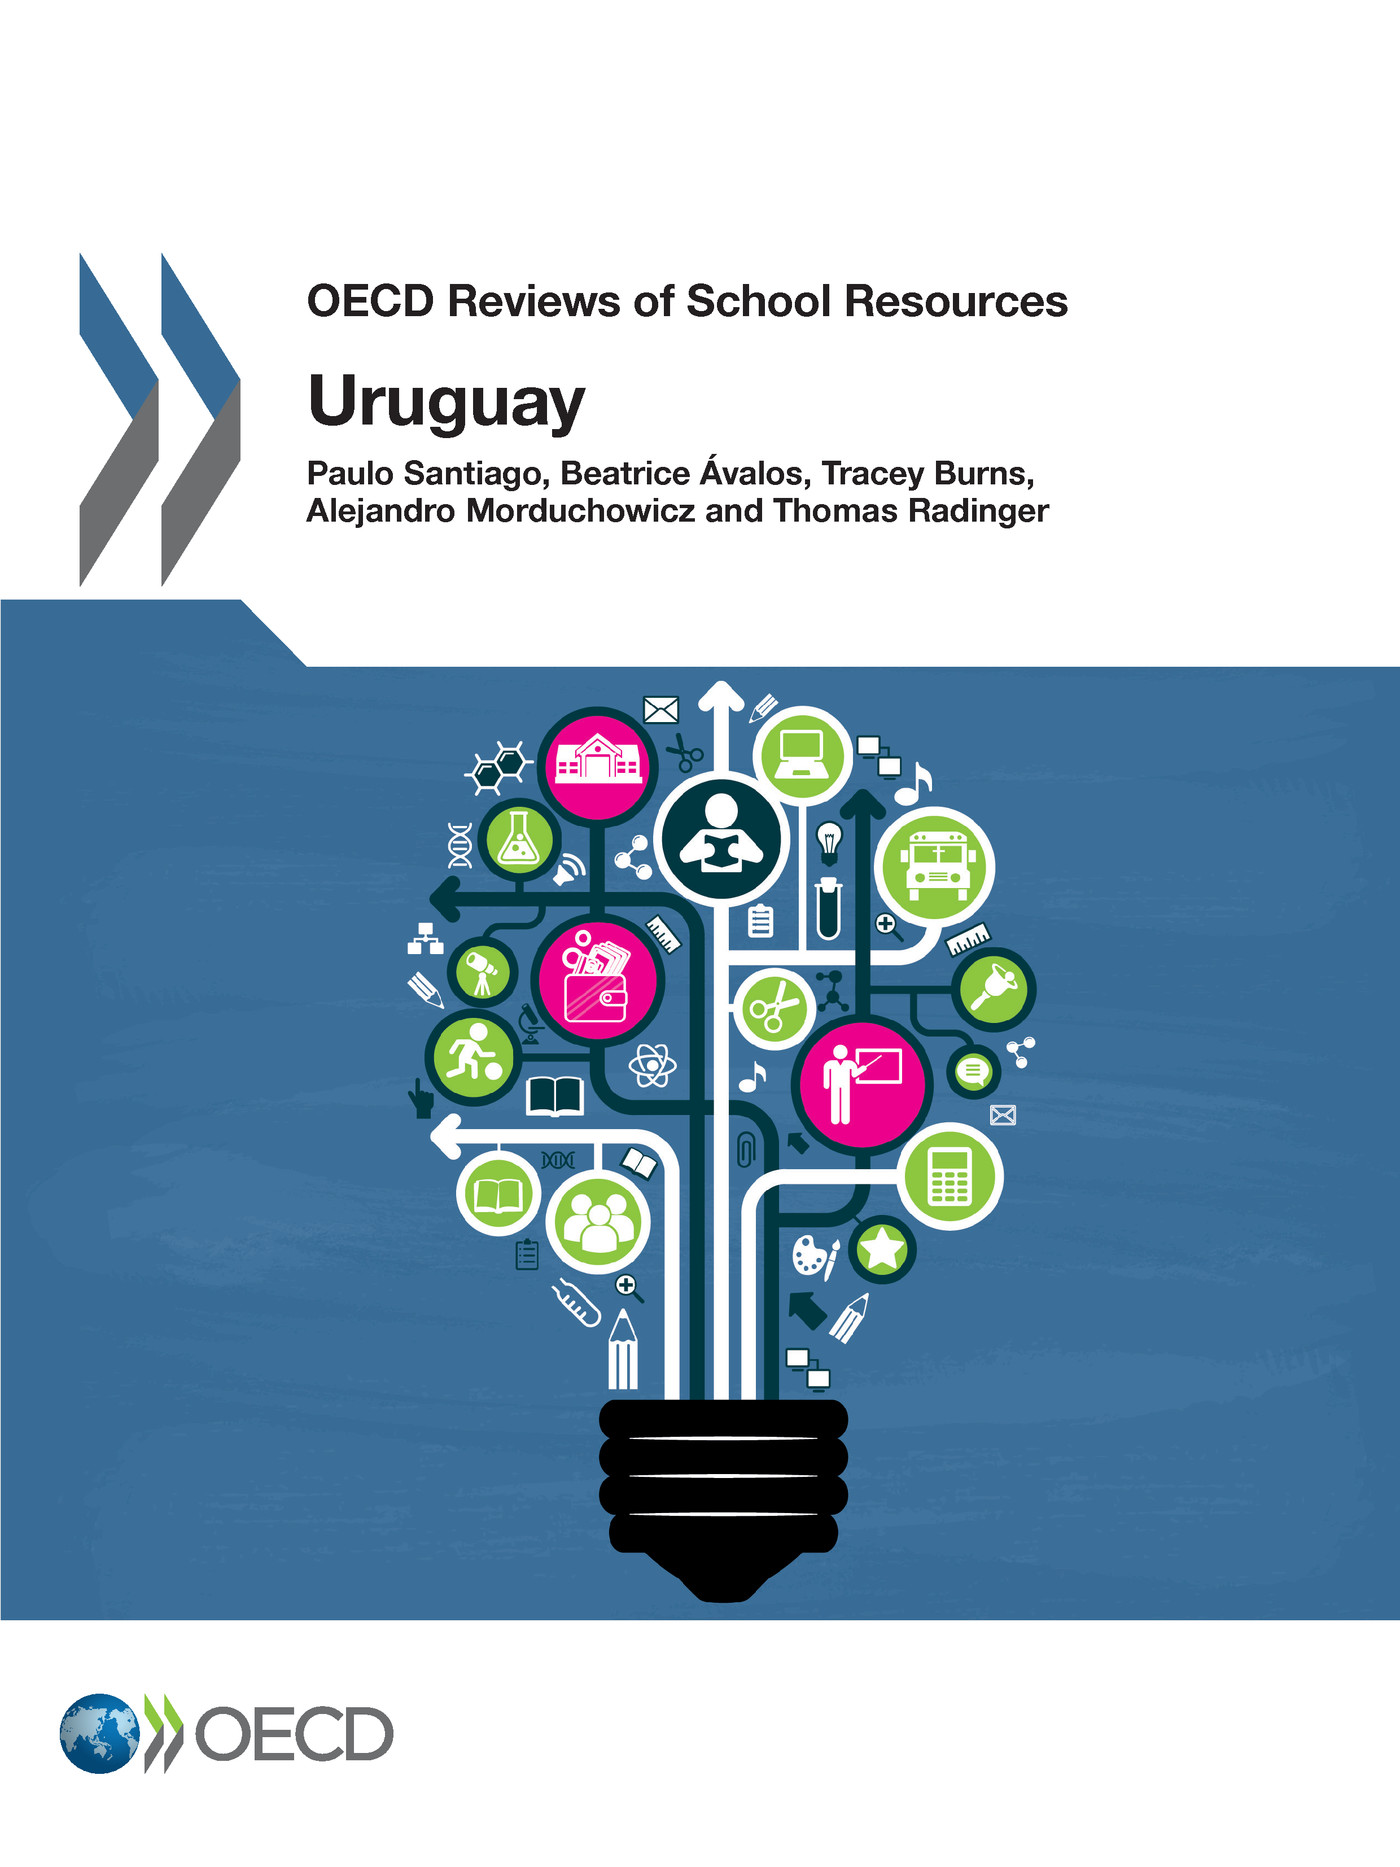 OECD Reviews of School Resources: Uruguay 2016 -  Collectif - OCDE / OECD